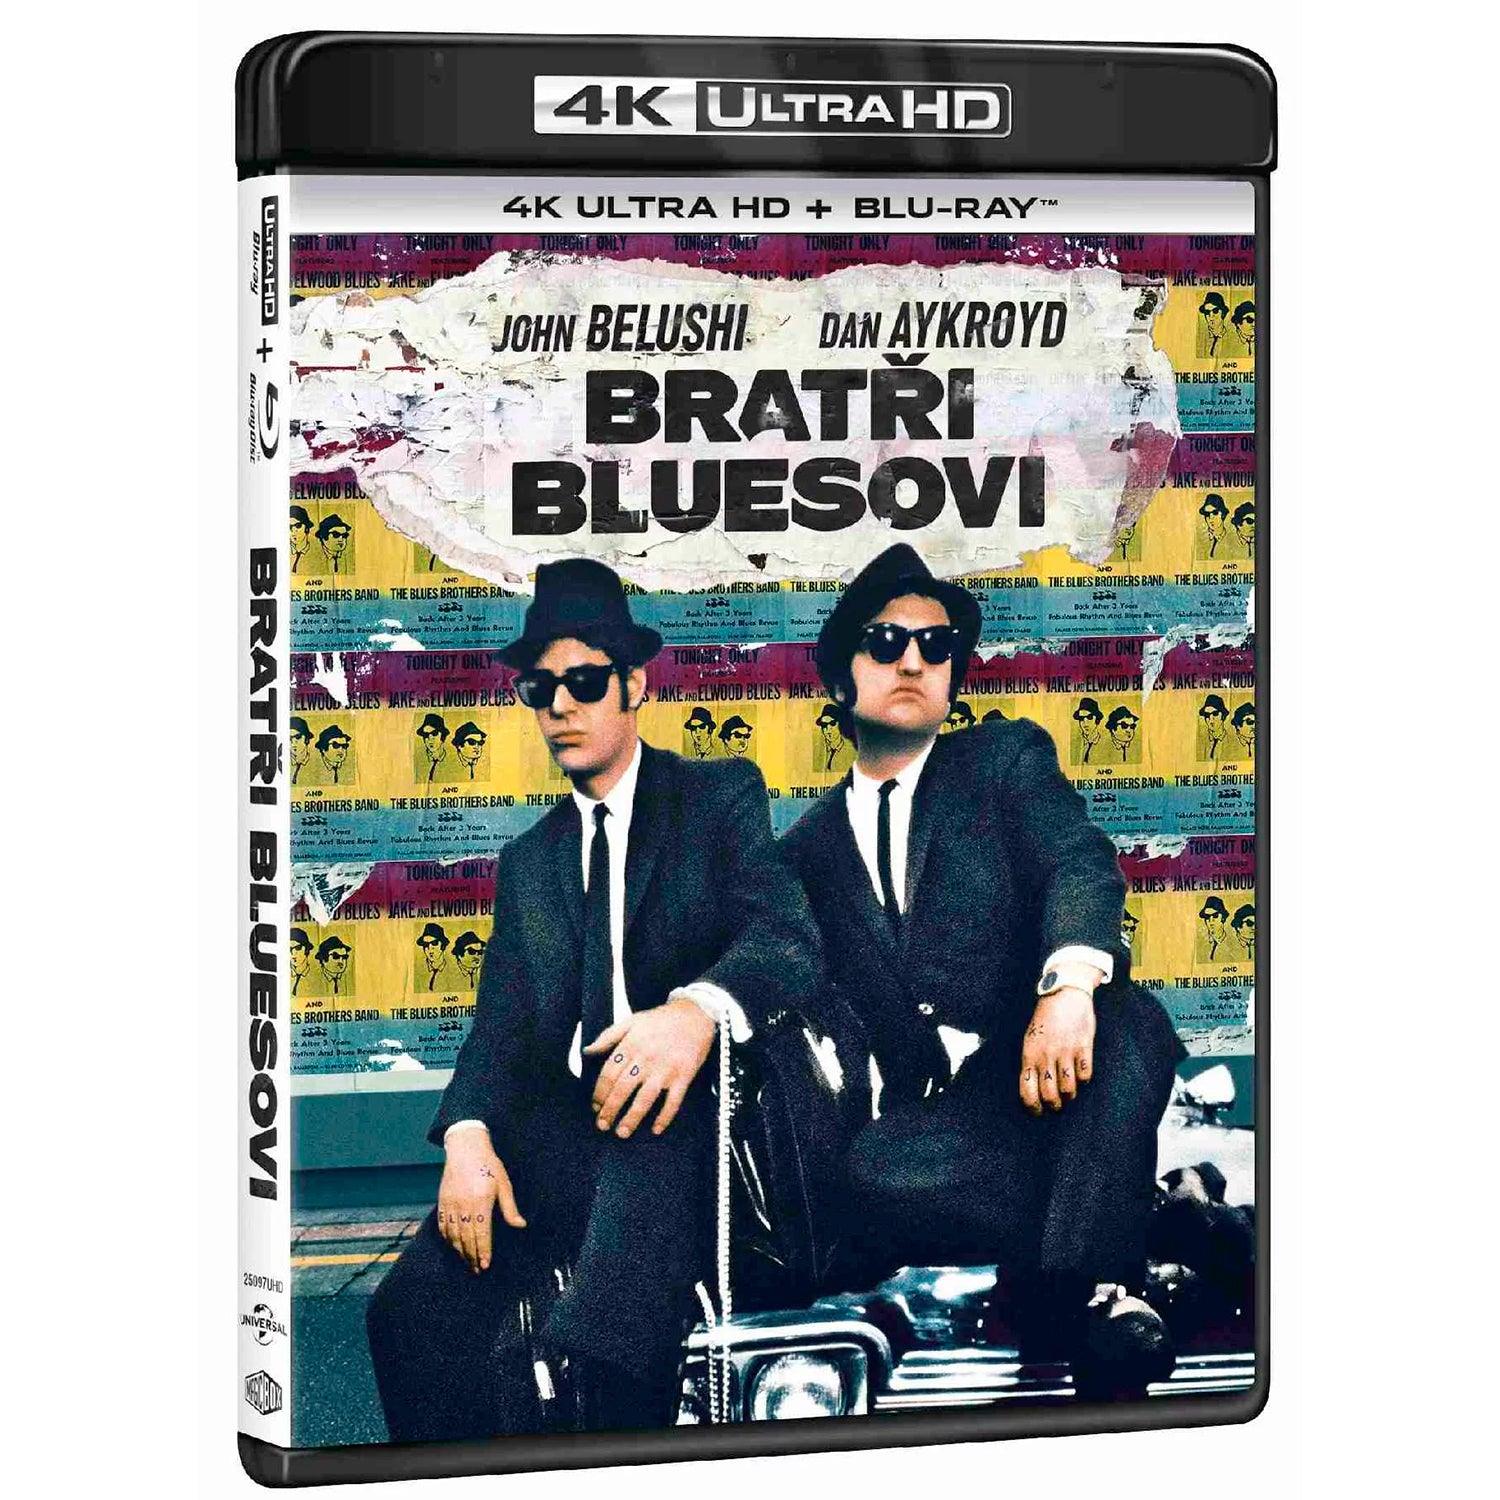 Братья Блюз (4K UHD Blu-ray)